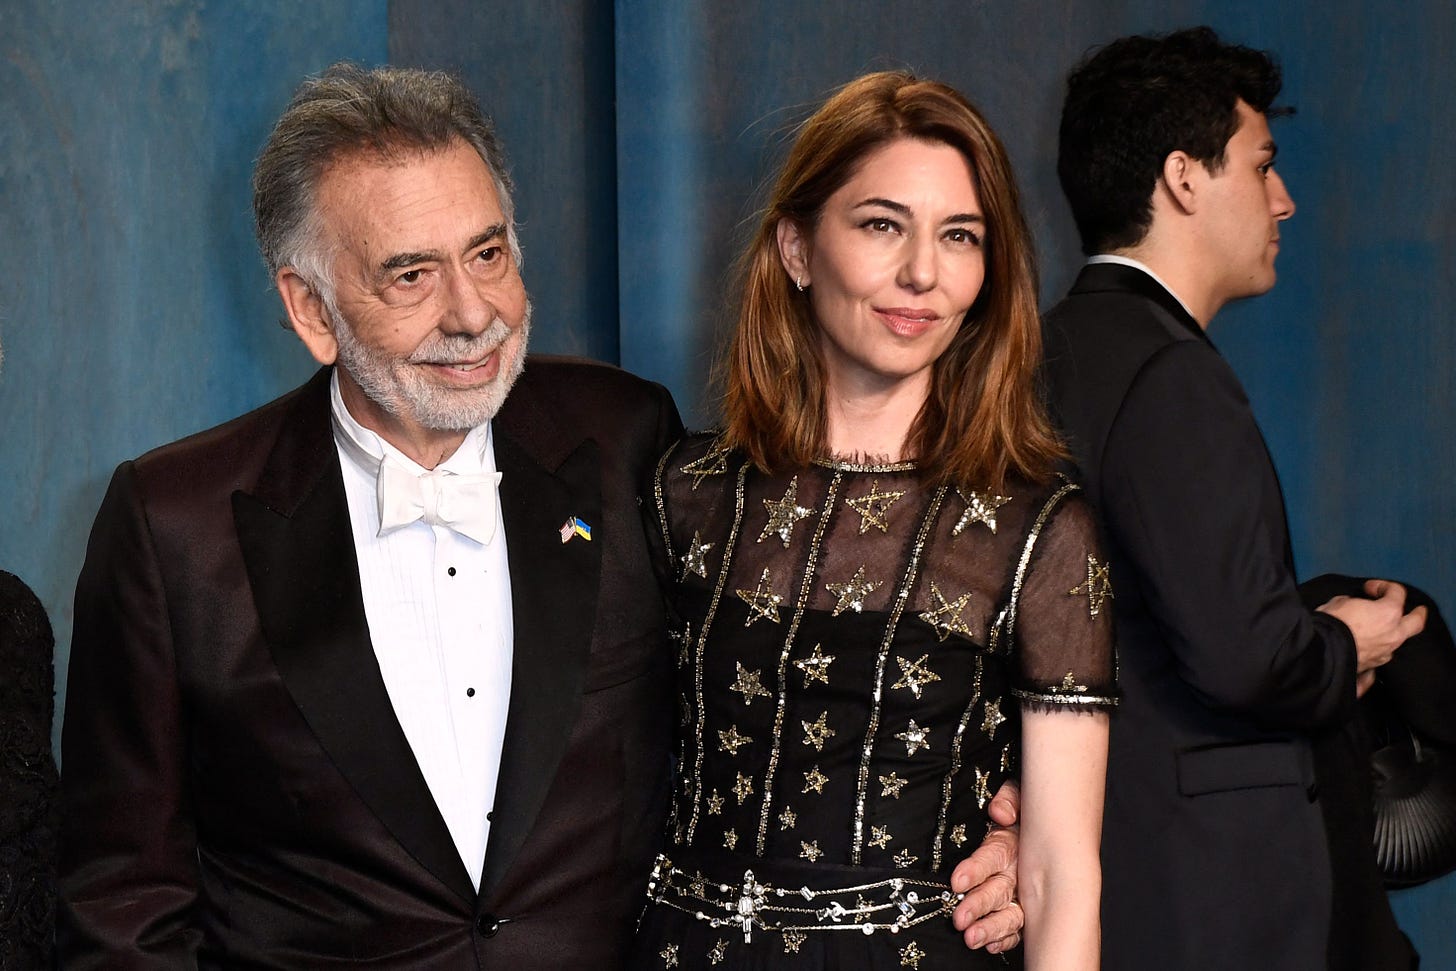 Directors Francis Ford Coppola and Sophia Coppola